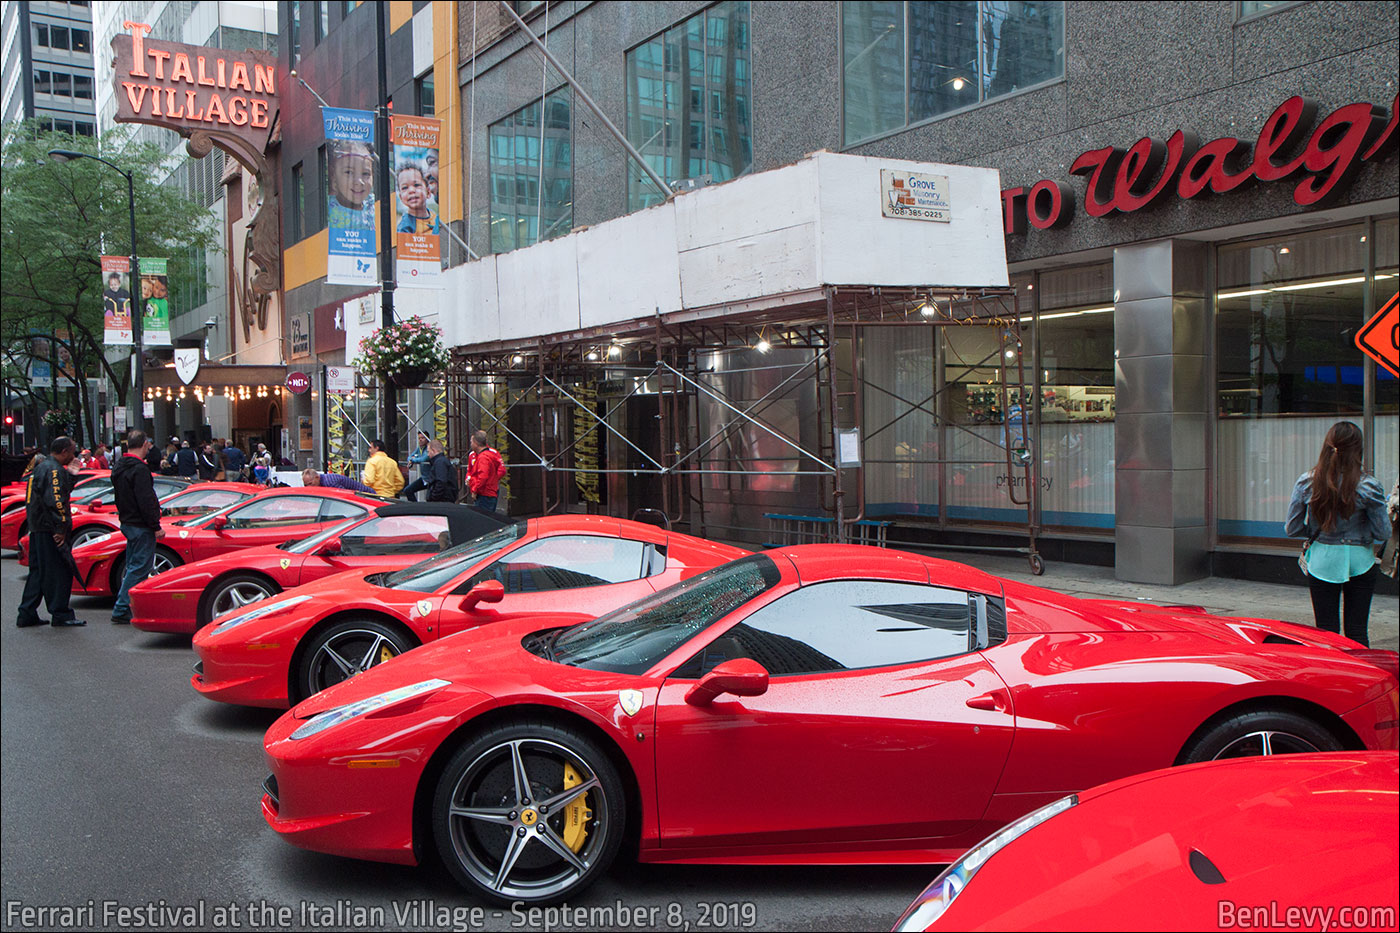 Ferraris outside of Italian Village in Chicago